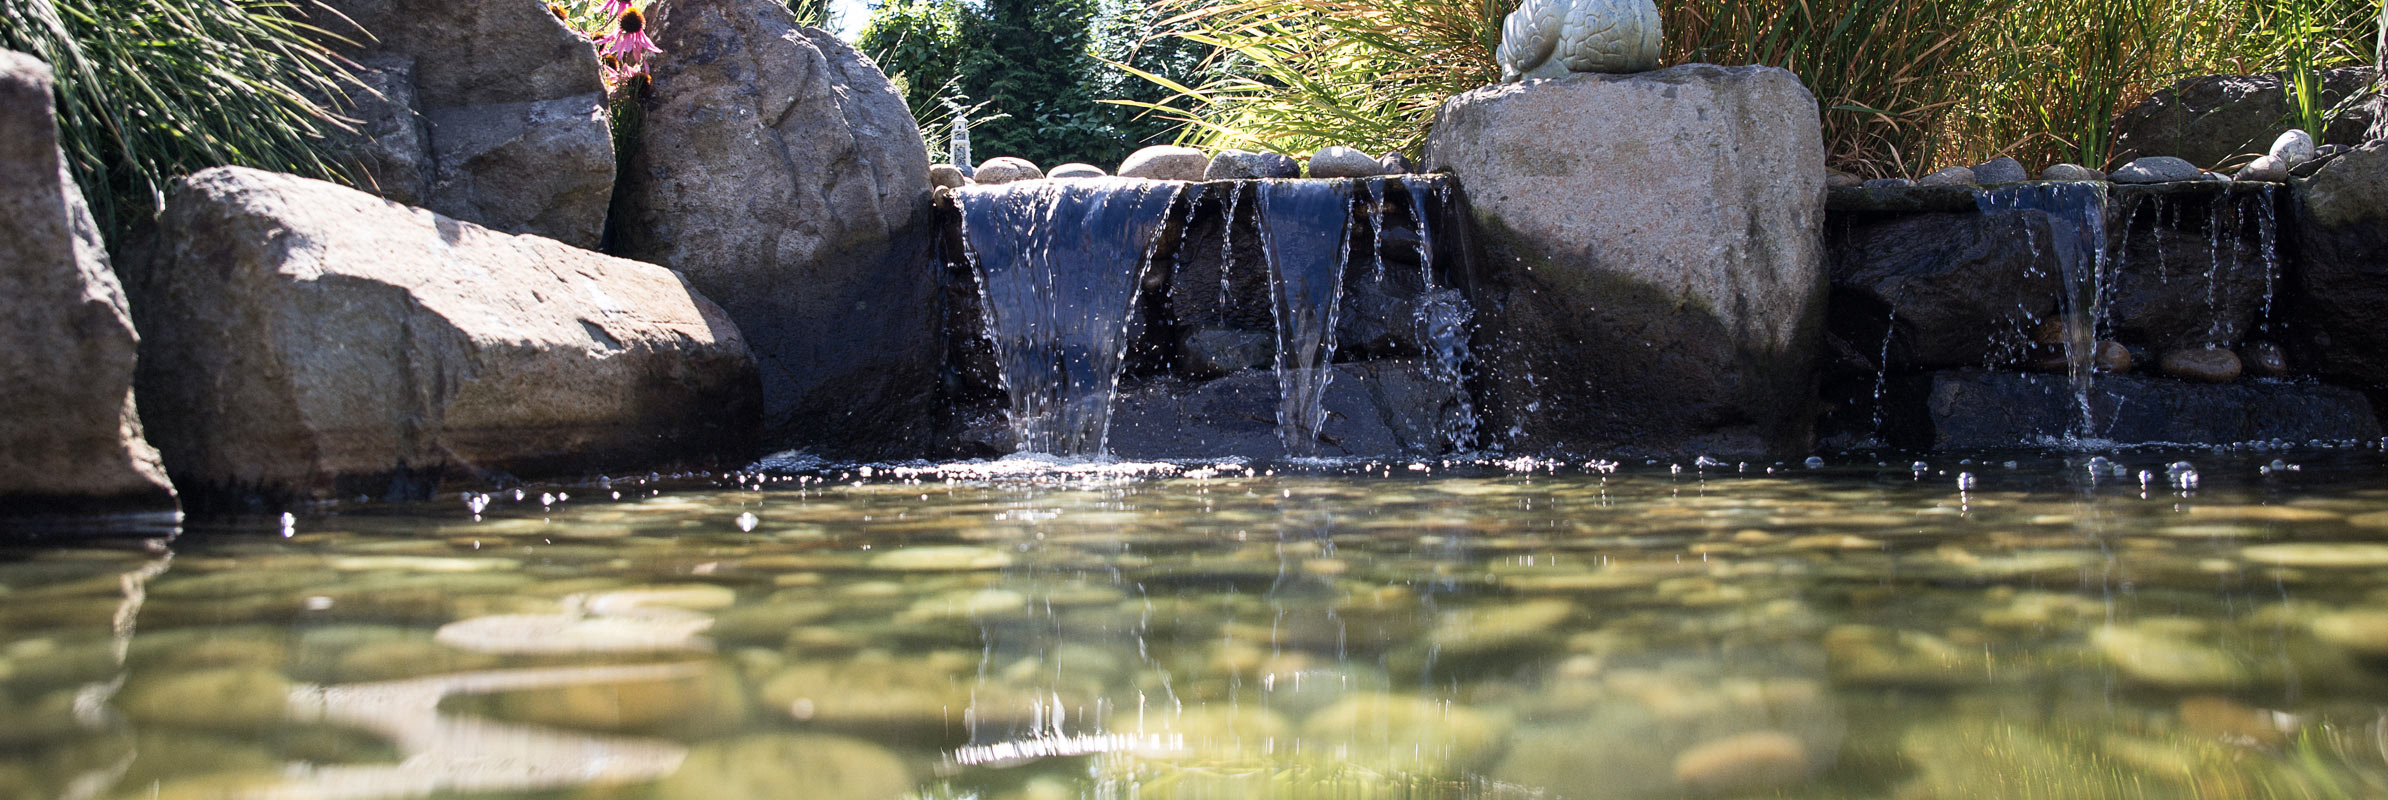 Sunridge Gardens Water Feature